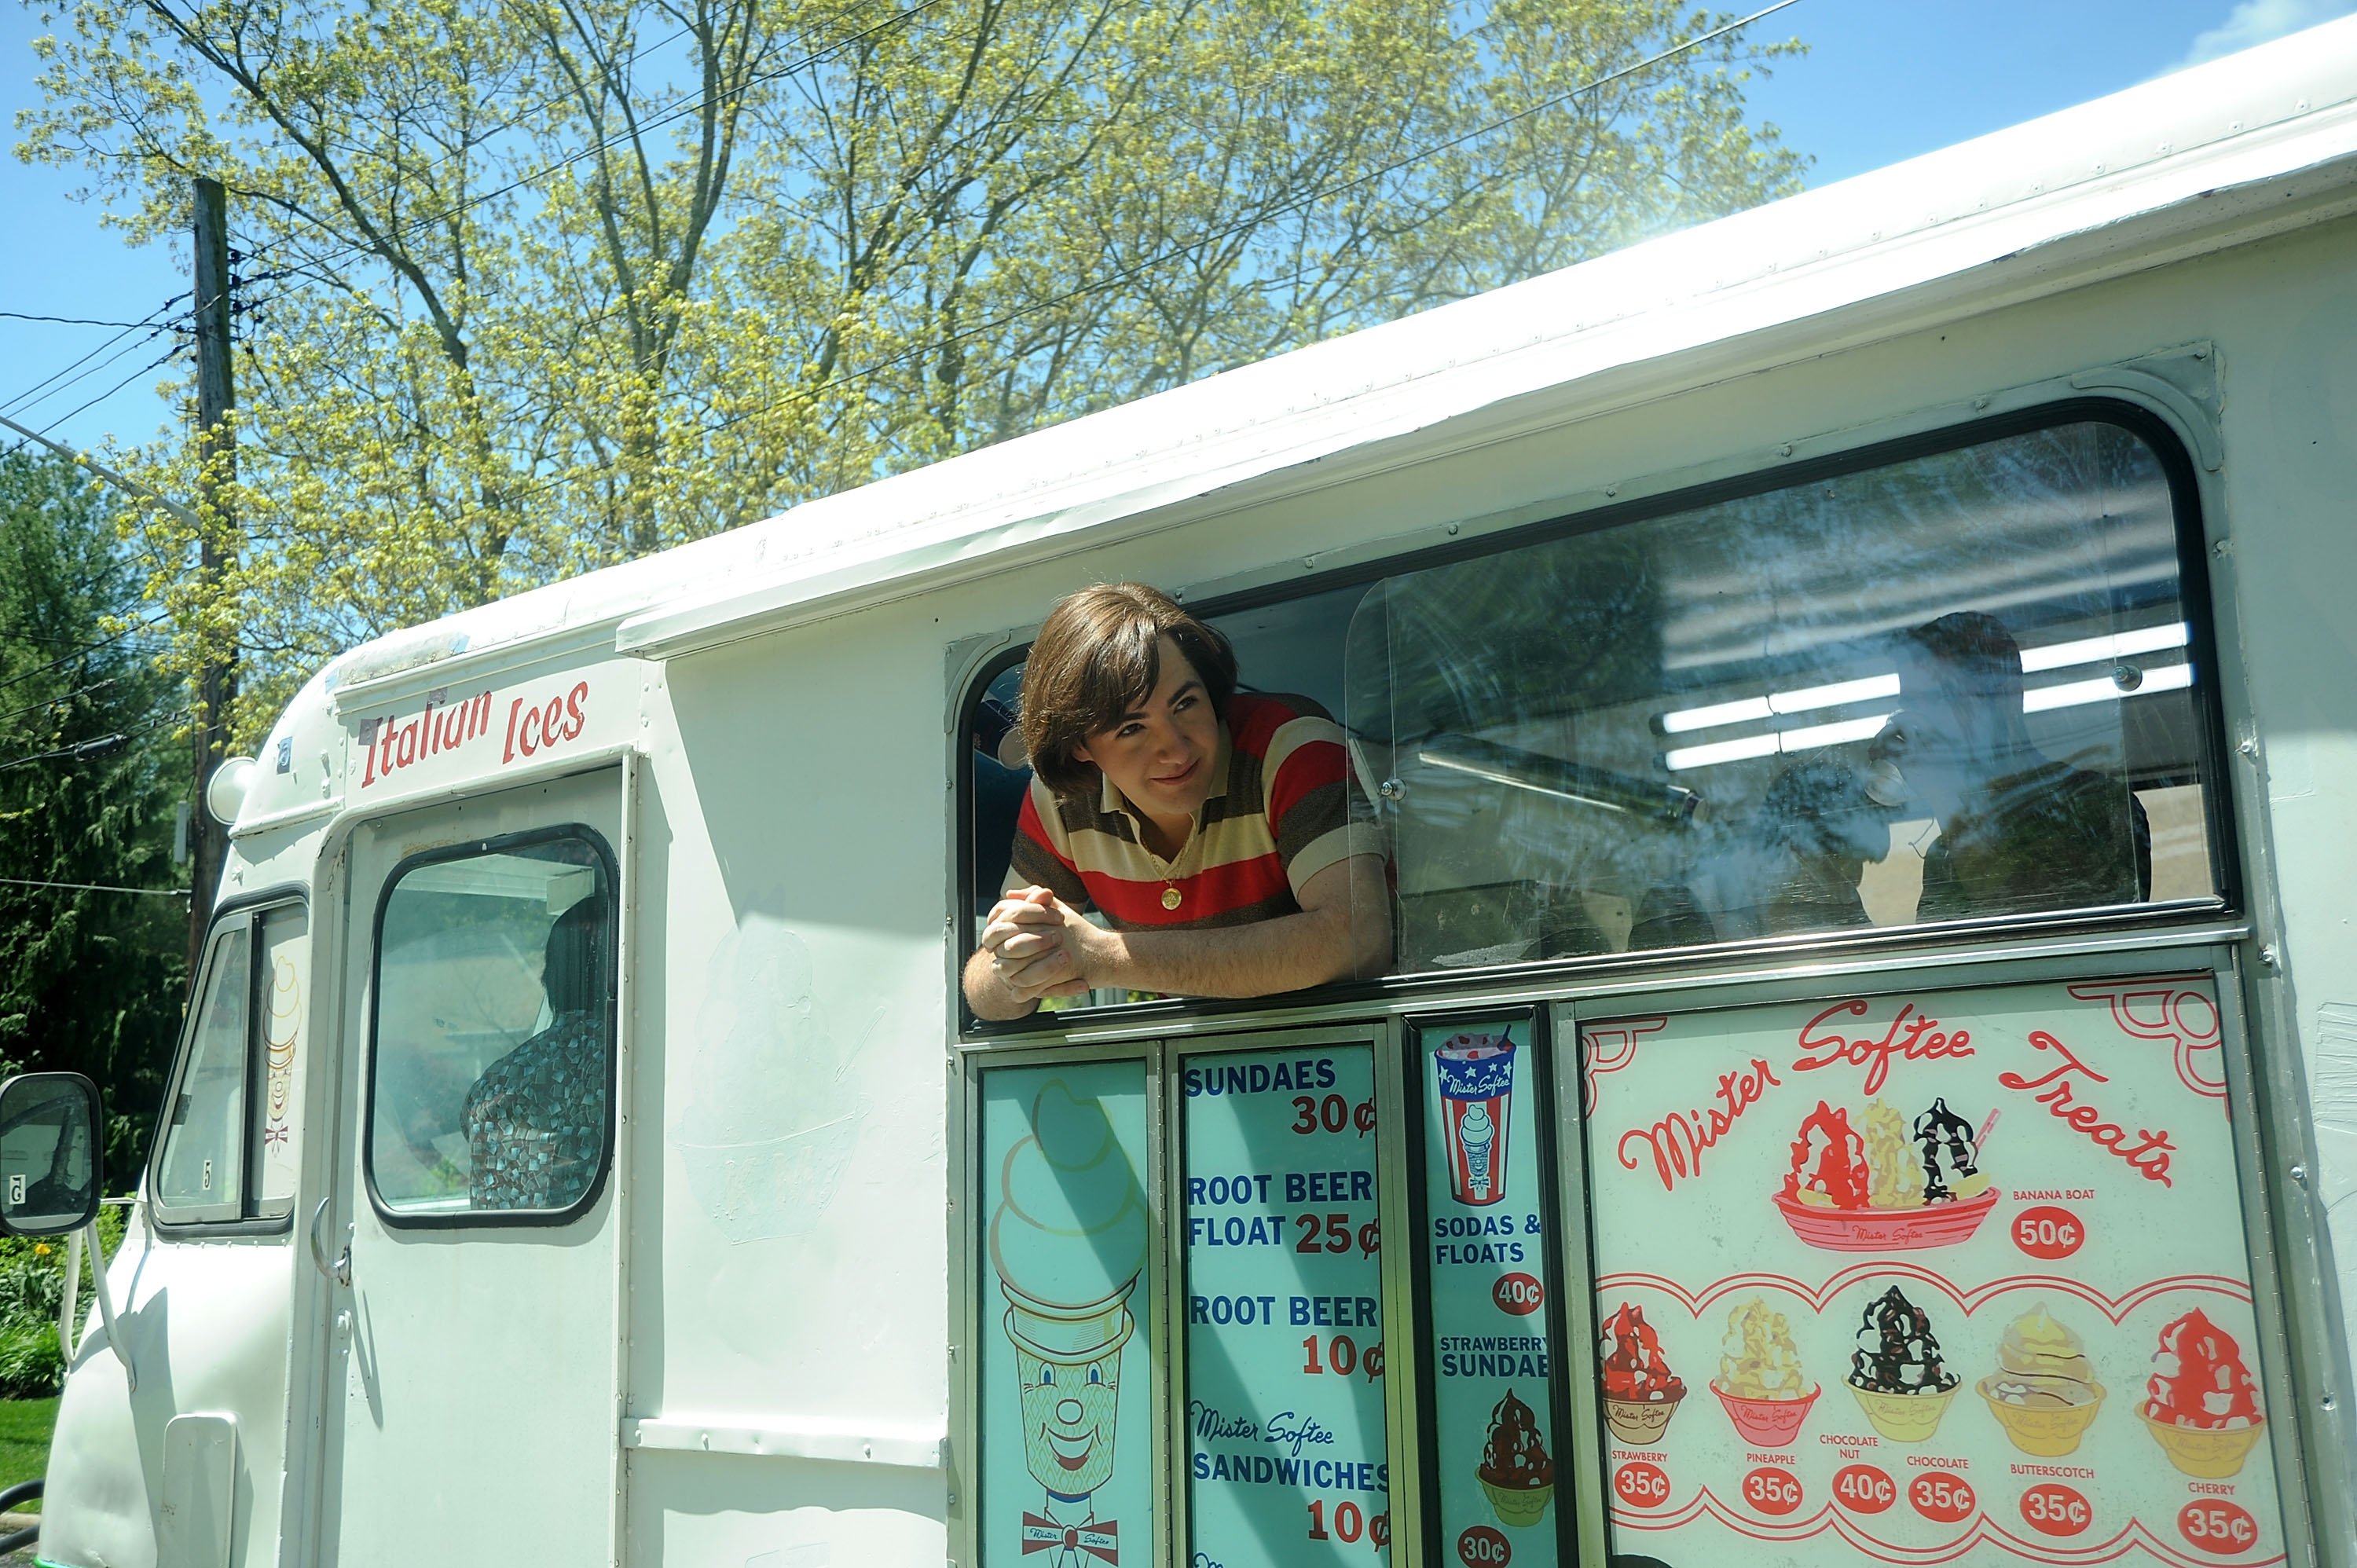 Michael Gandolfini serves up Mister Softee in an ice cream truck on set of the Sopranos movie The Many Saints of Newark movie